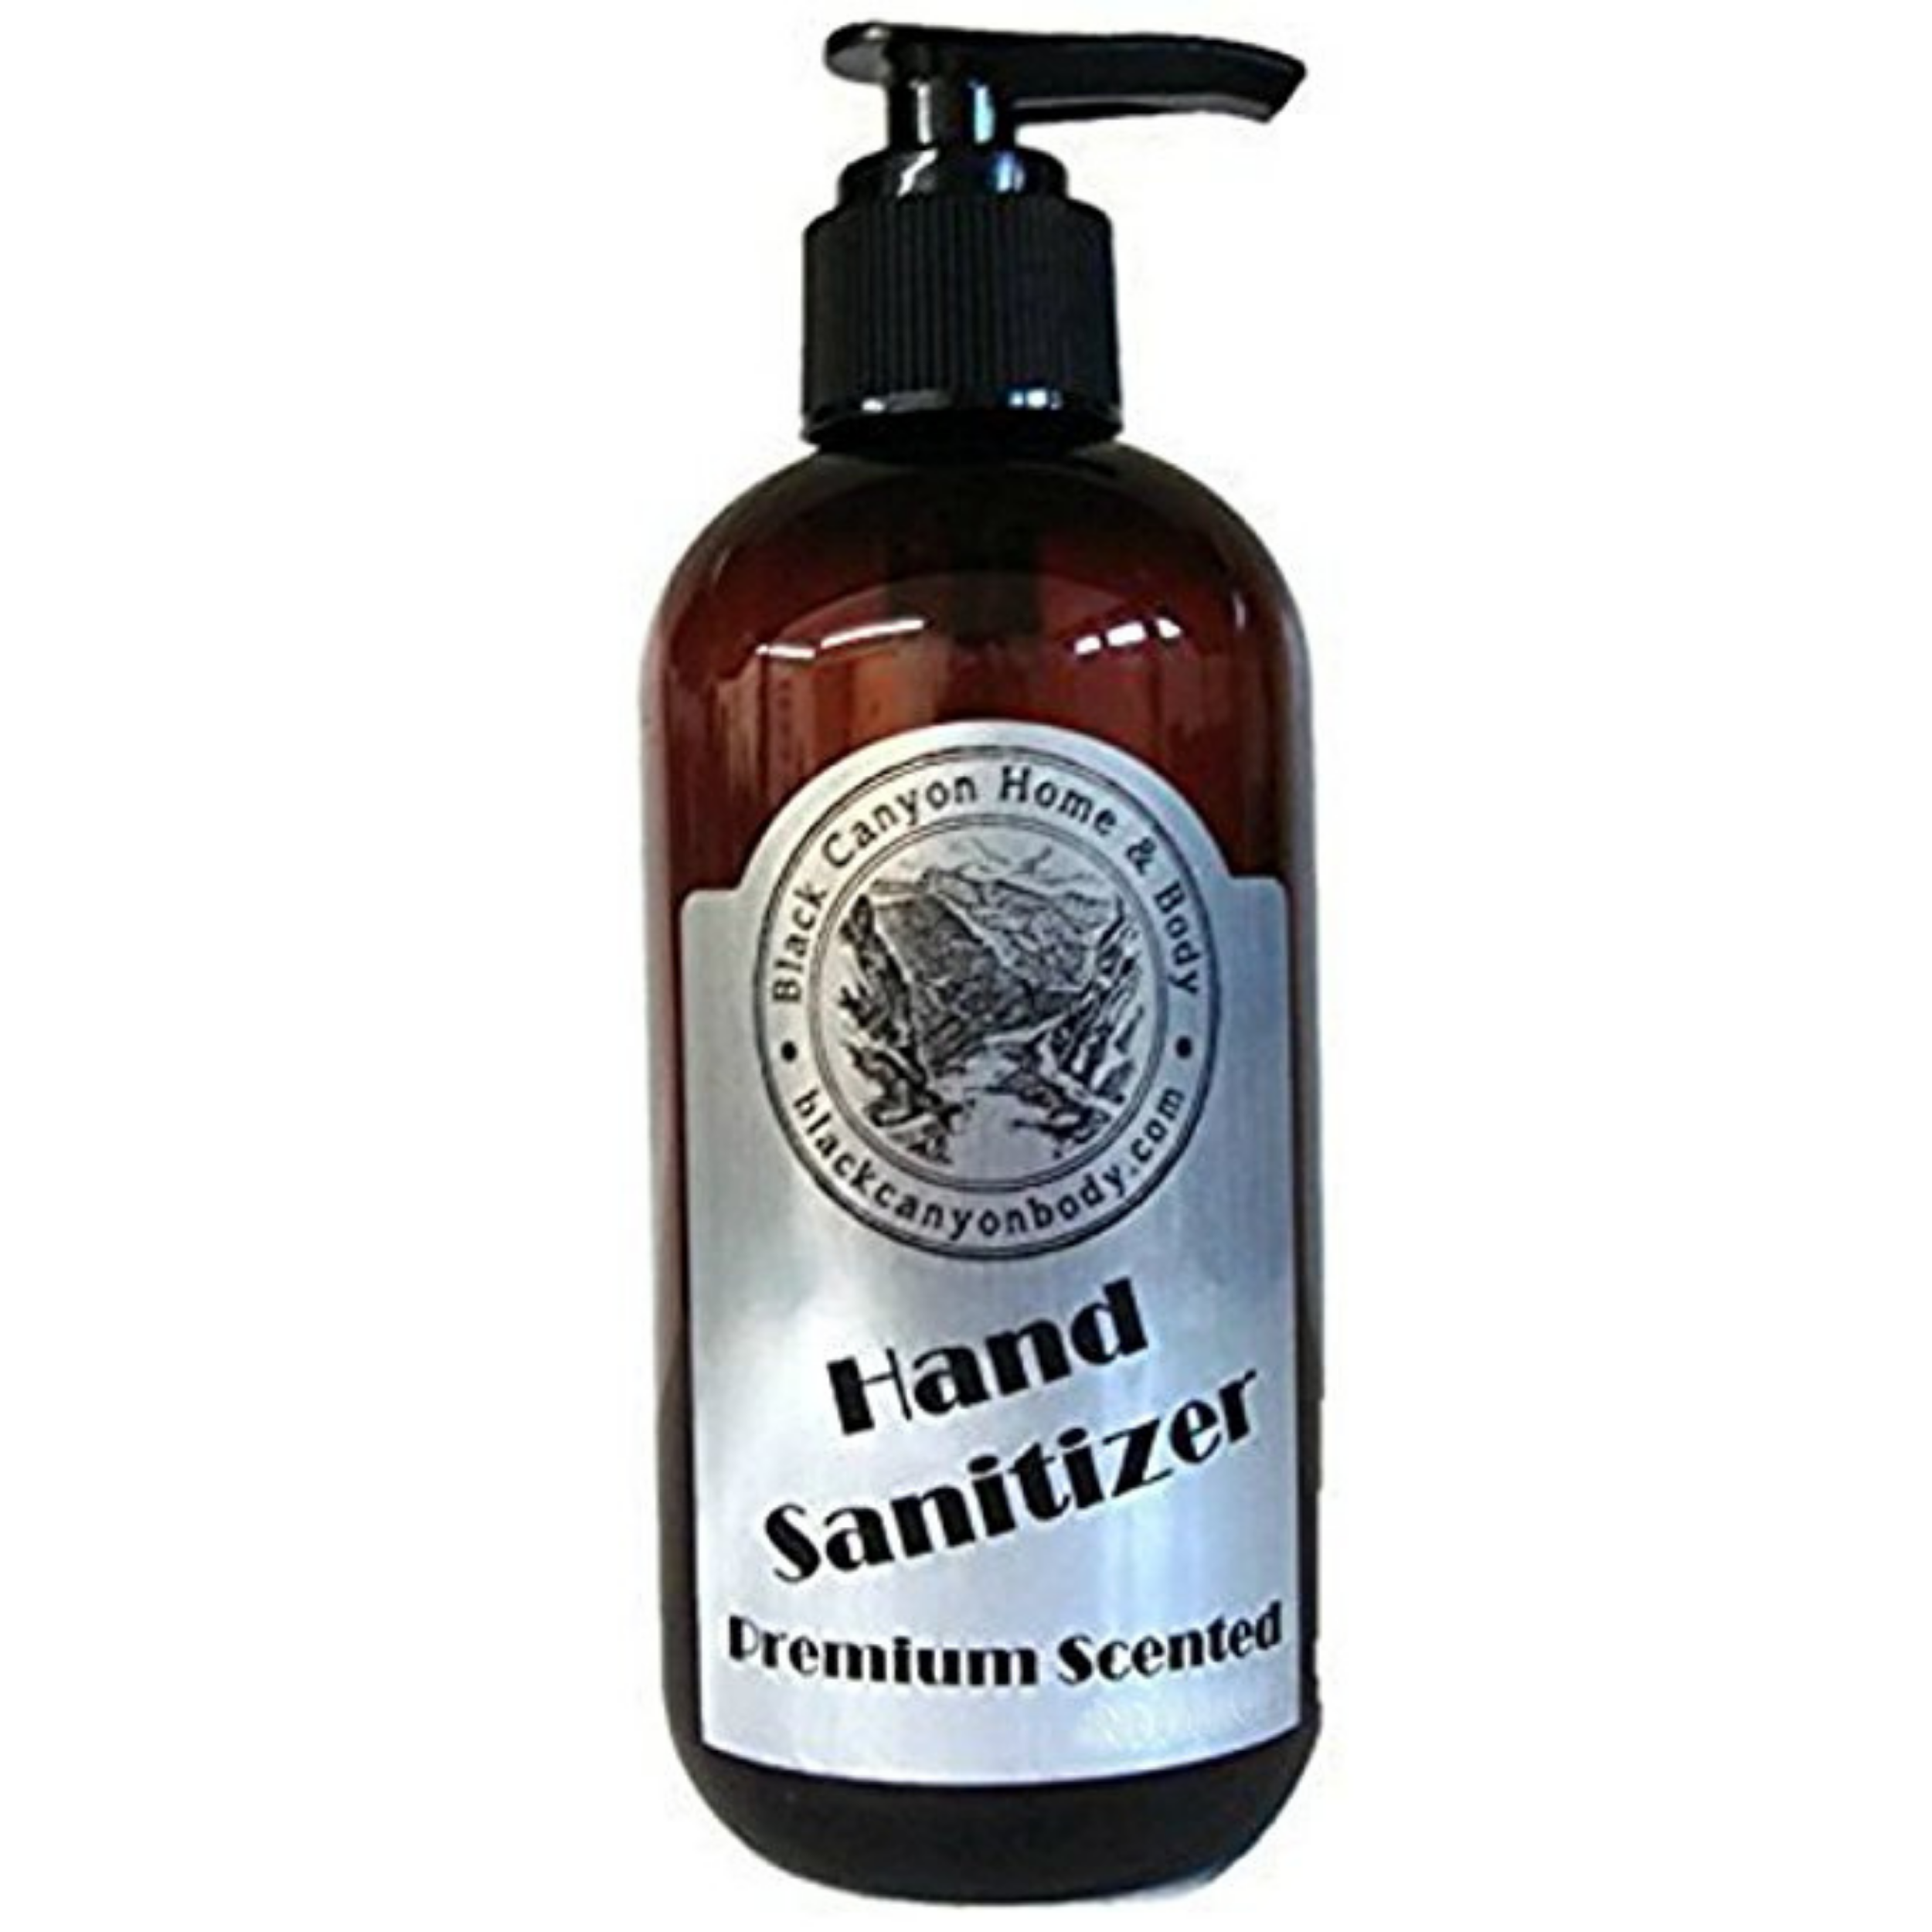 Black Canyon Sea Salt & Aloe Scented Hand Sanitizer Gel